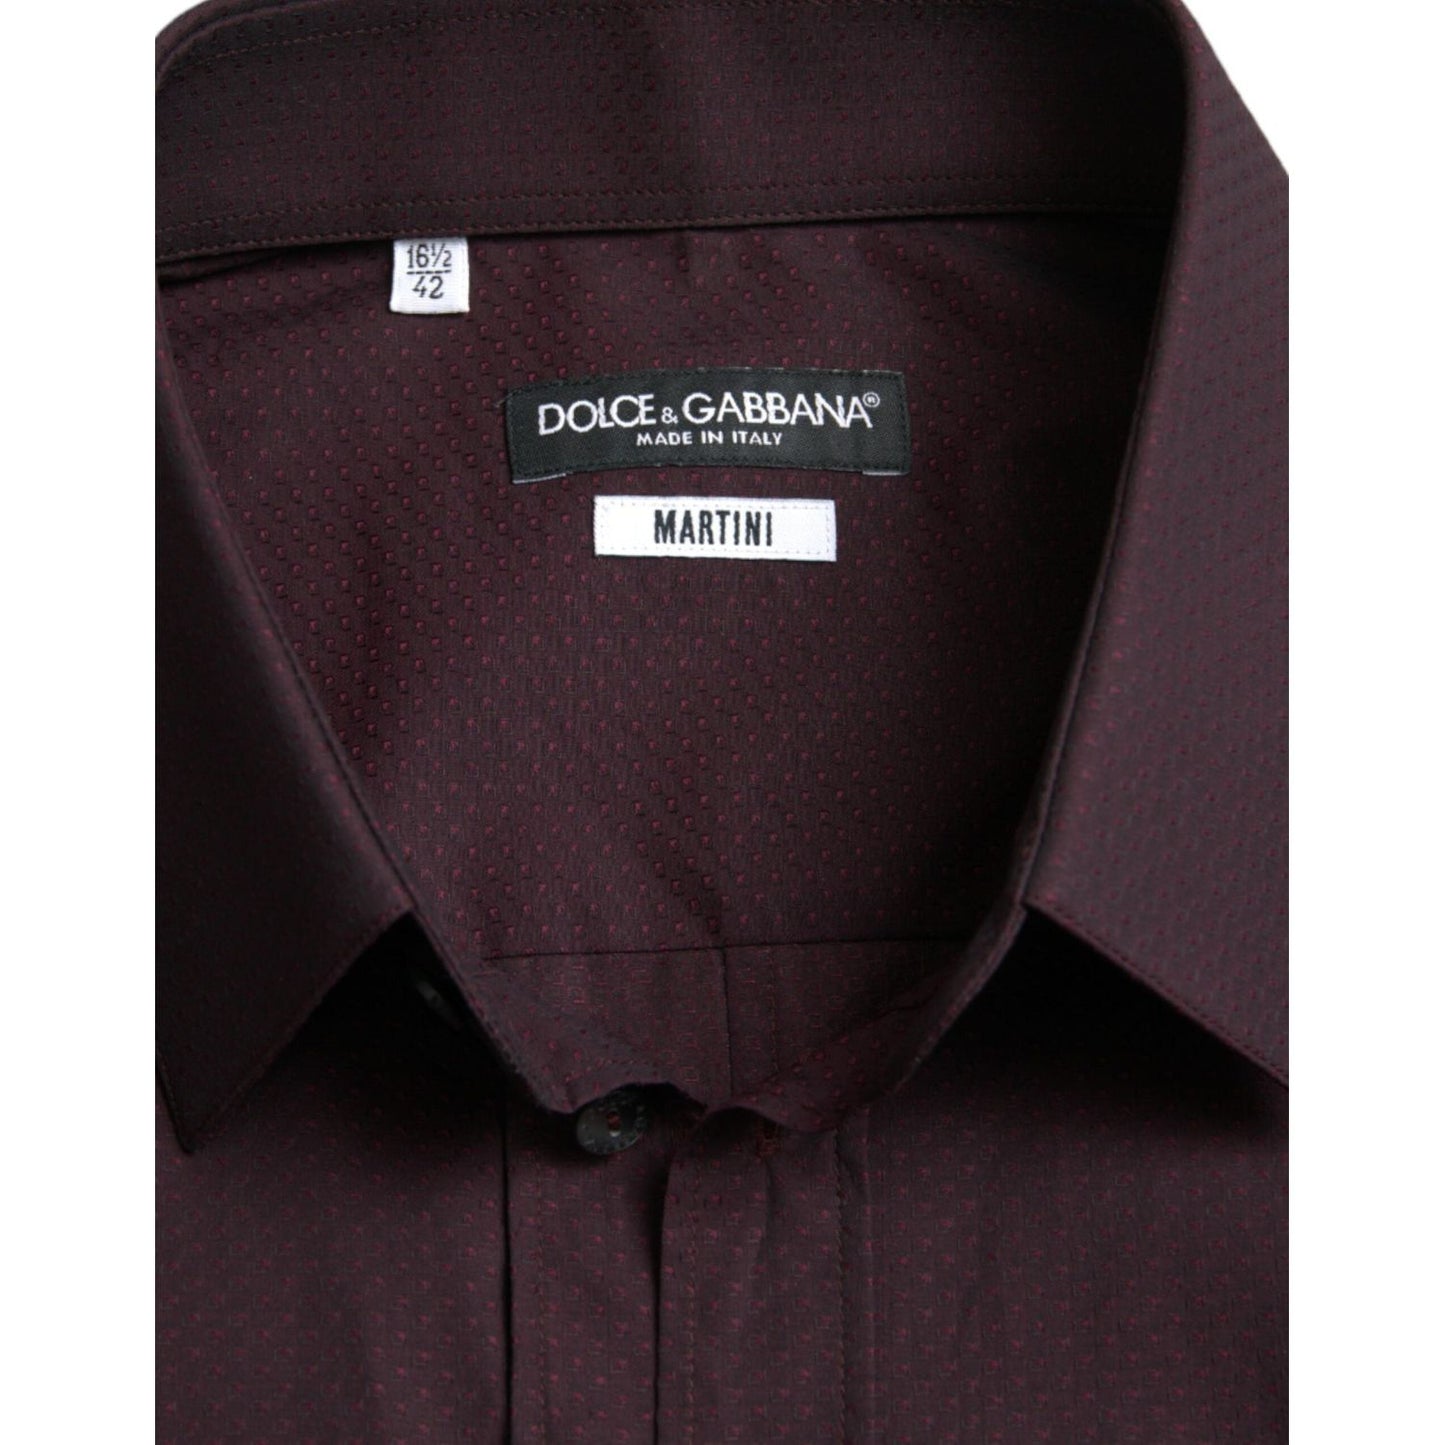 Dolce & Gabbana Elegant Maroon Martini Dress Shirt maroon-jacquard-formal-dress-martini-shirt